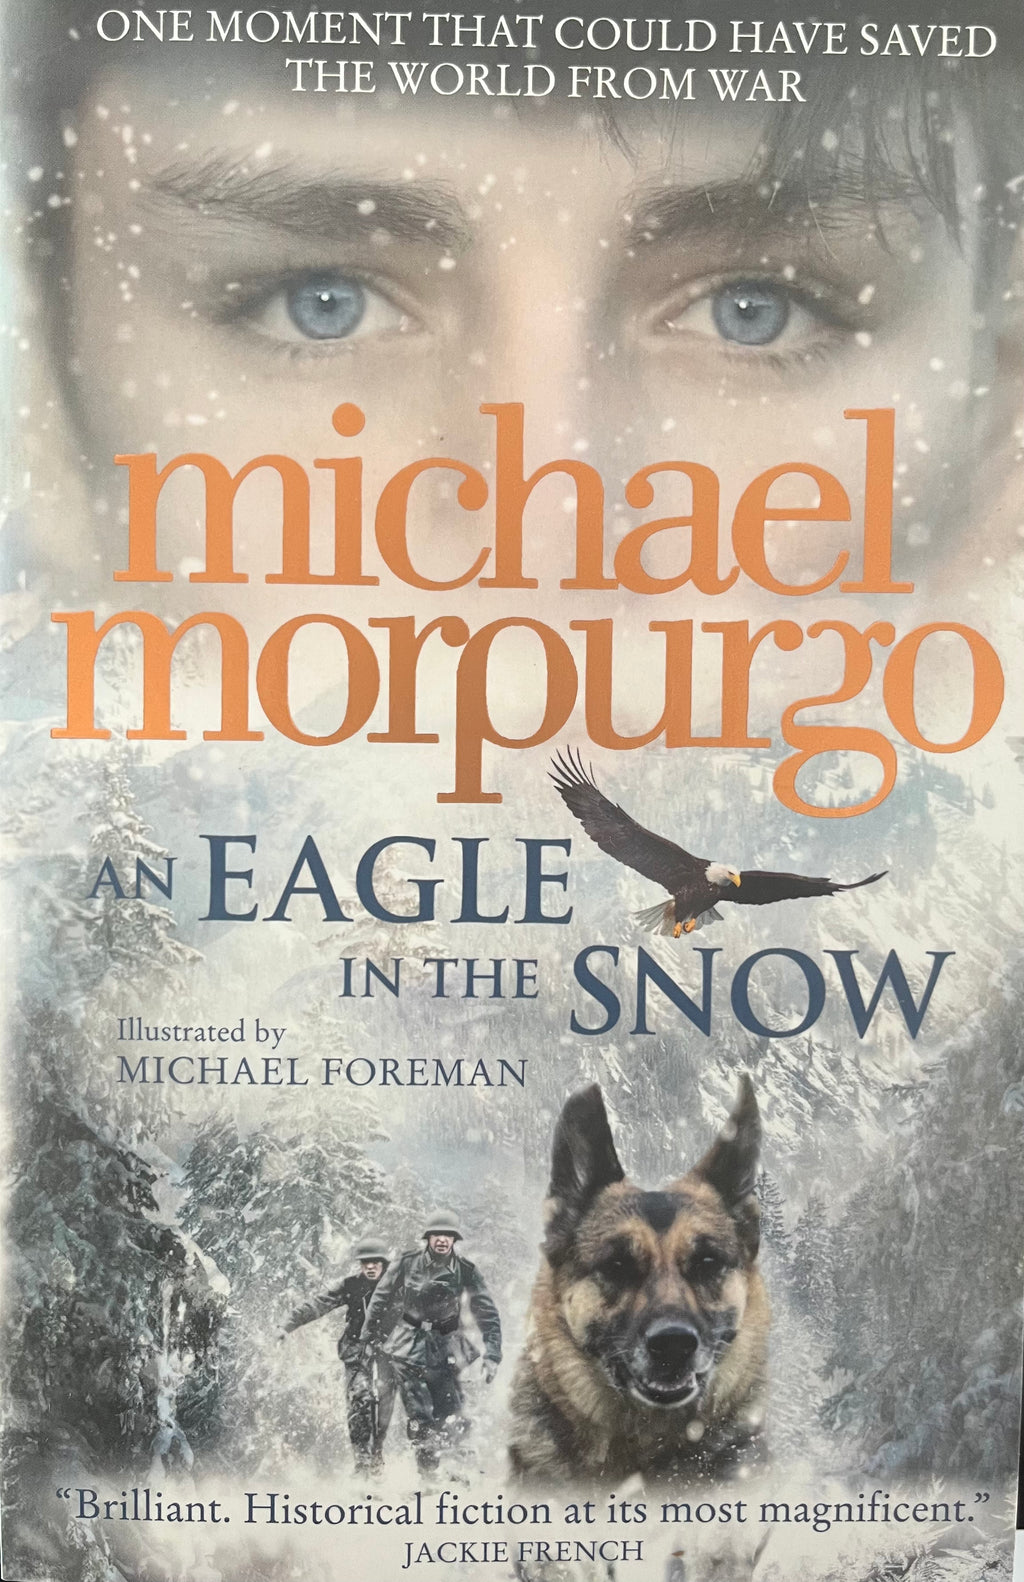 Michael Morpurgo: An Eagle in the Snow